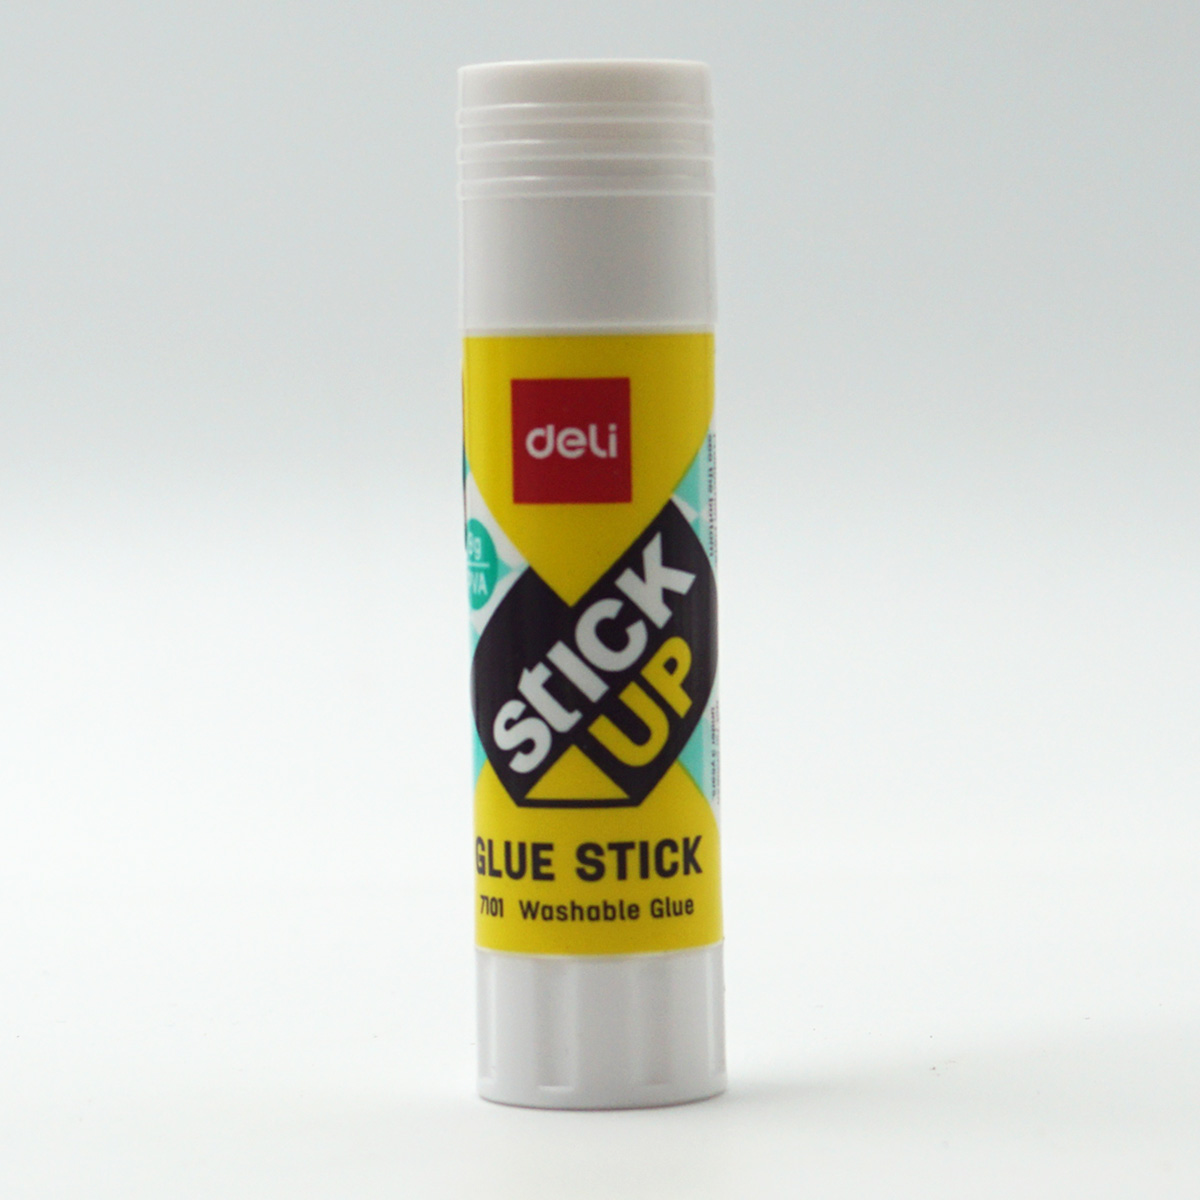 Deli 7101Stick up Glue Stick (Washable Glue) SKU 96691